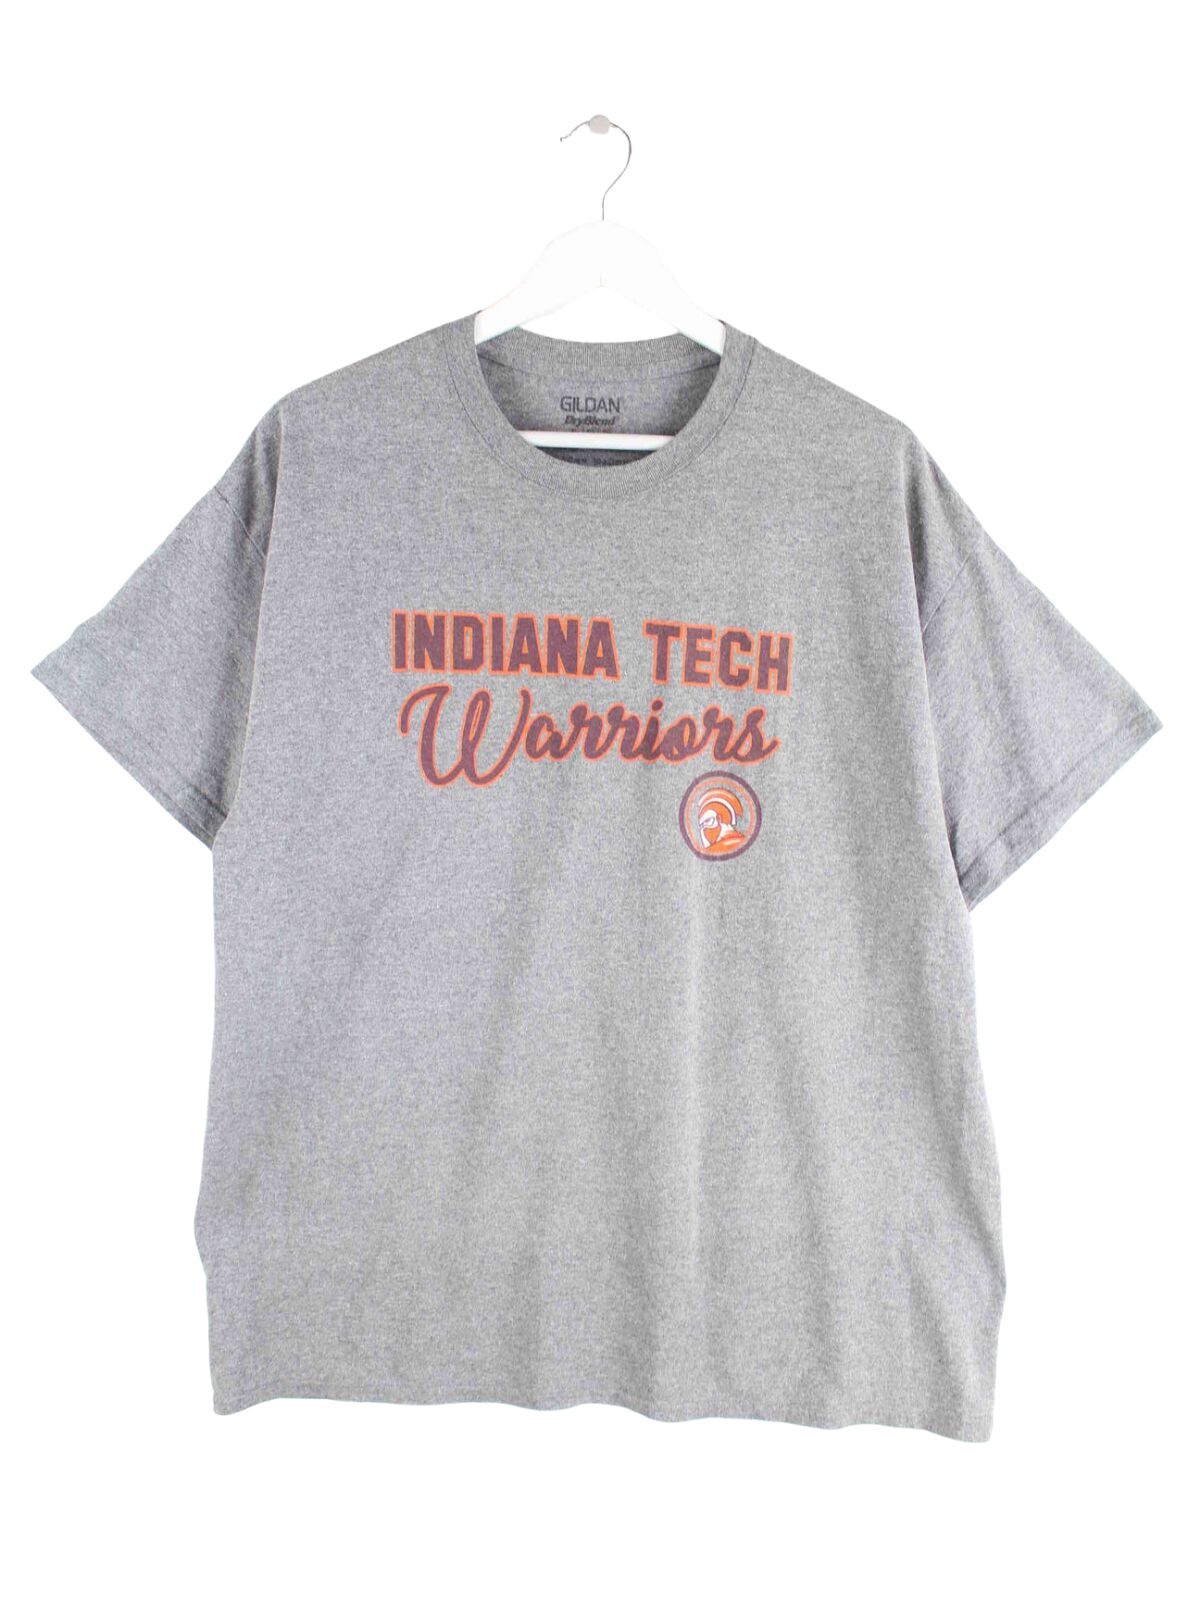 Gildan Indiana Tech Warriors T-Shirt Grau XL (front image)